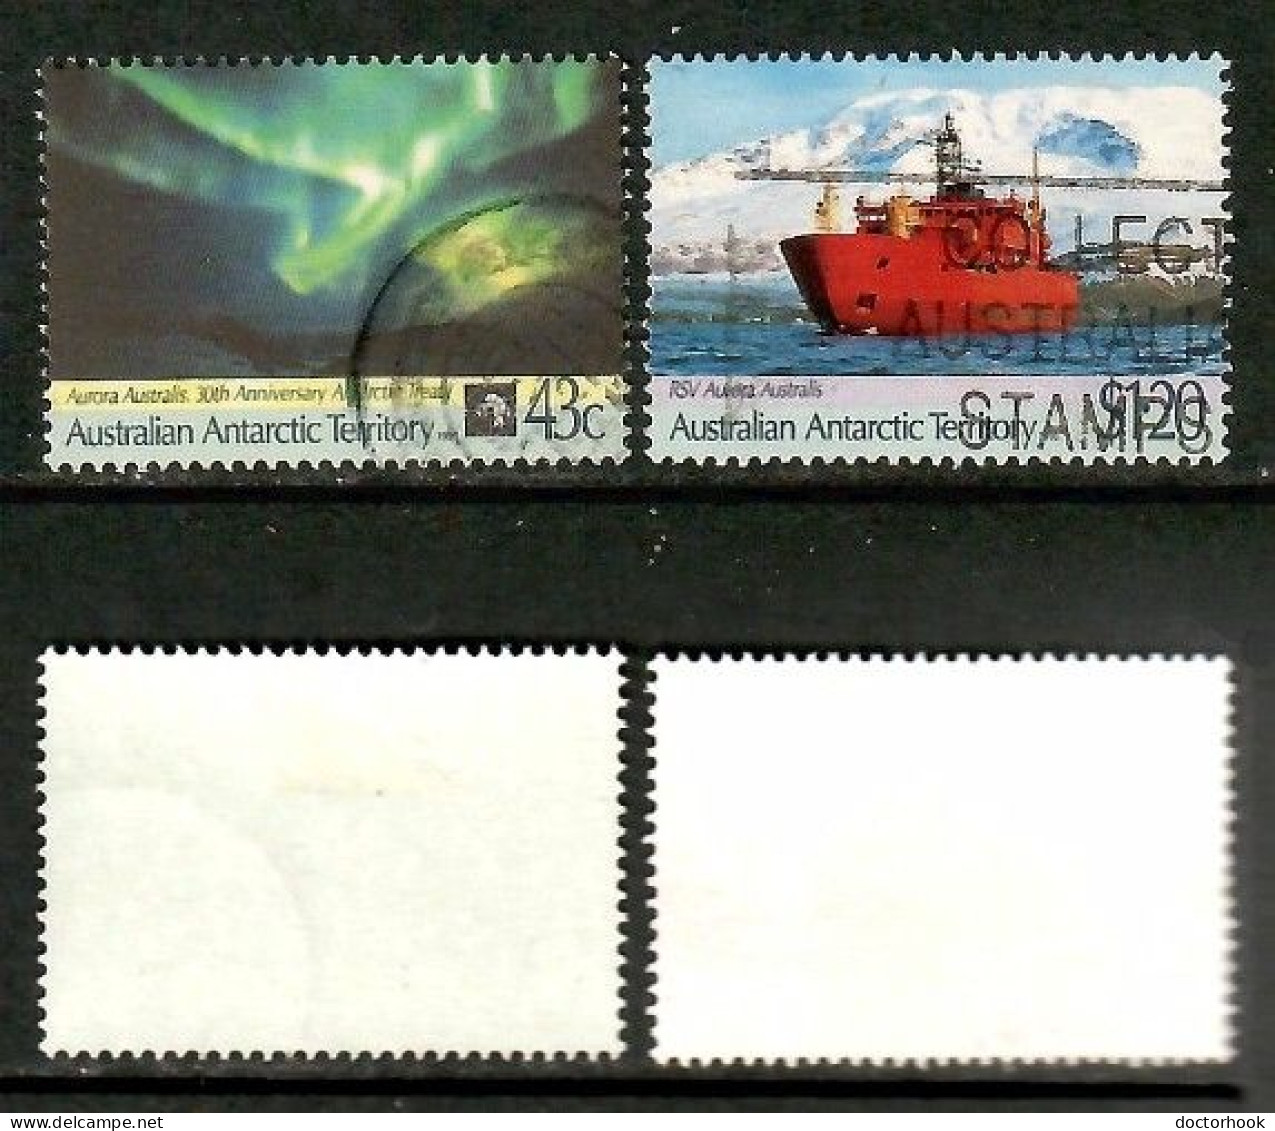 AUSTRALIAN ANTARCTIC TERRITORY   Scott # L 81-2 USED (CONDITION AS PER SCAN) (Stamp Scan # 1008-7) - Usati